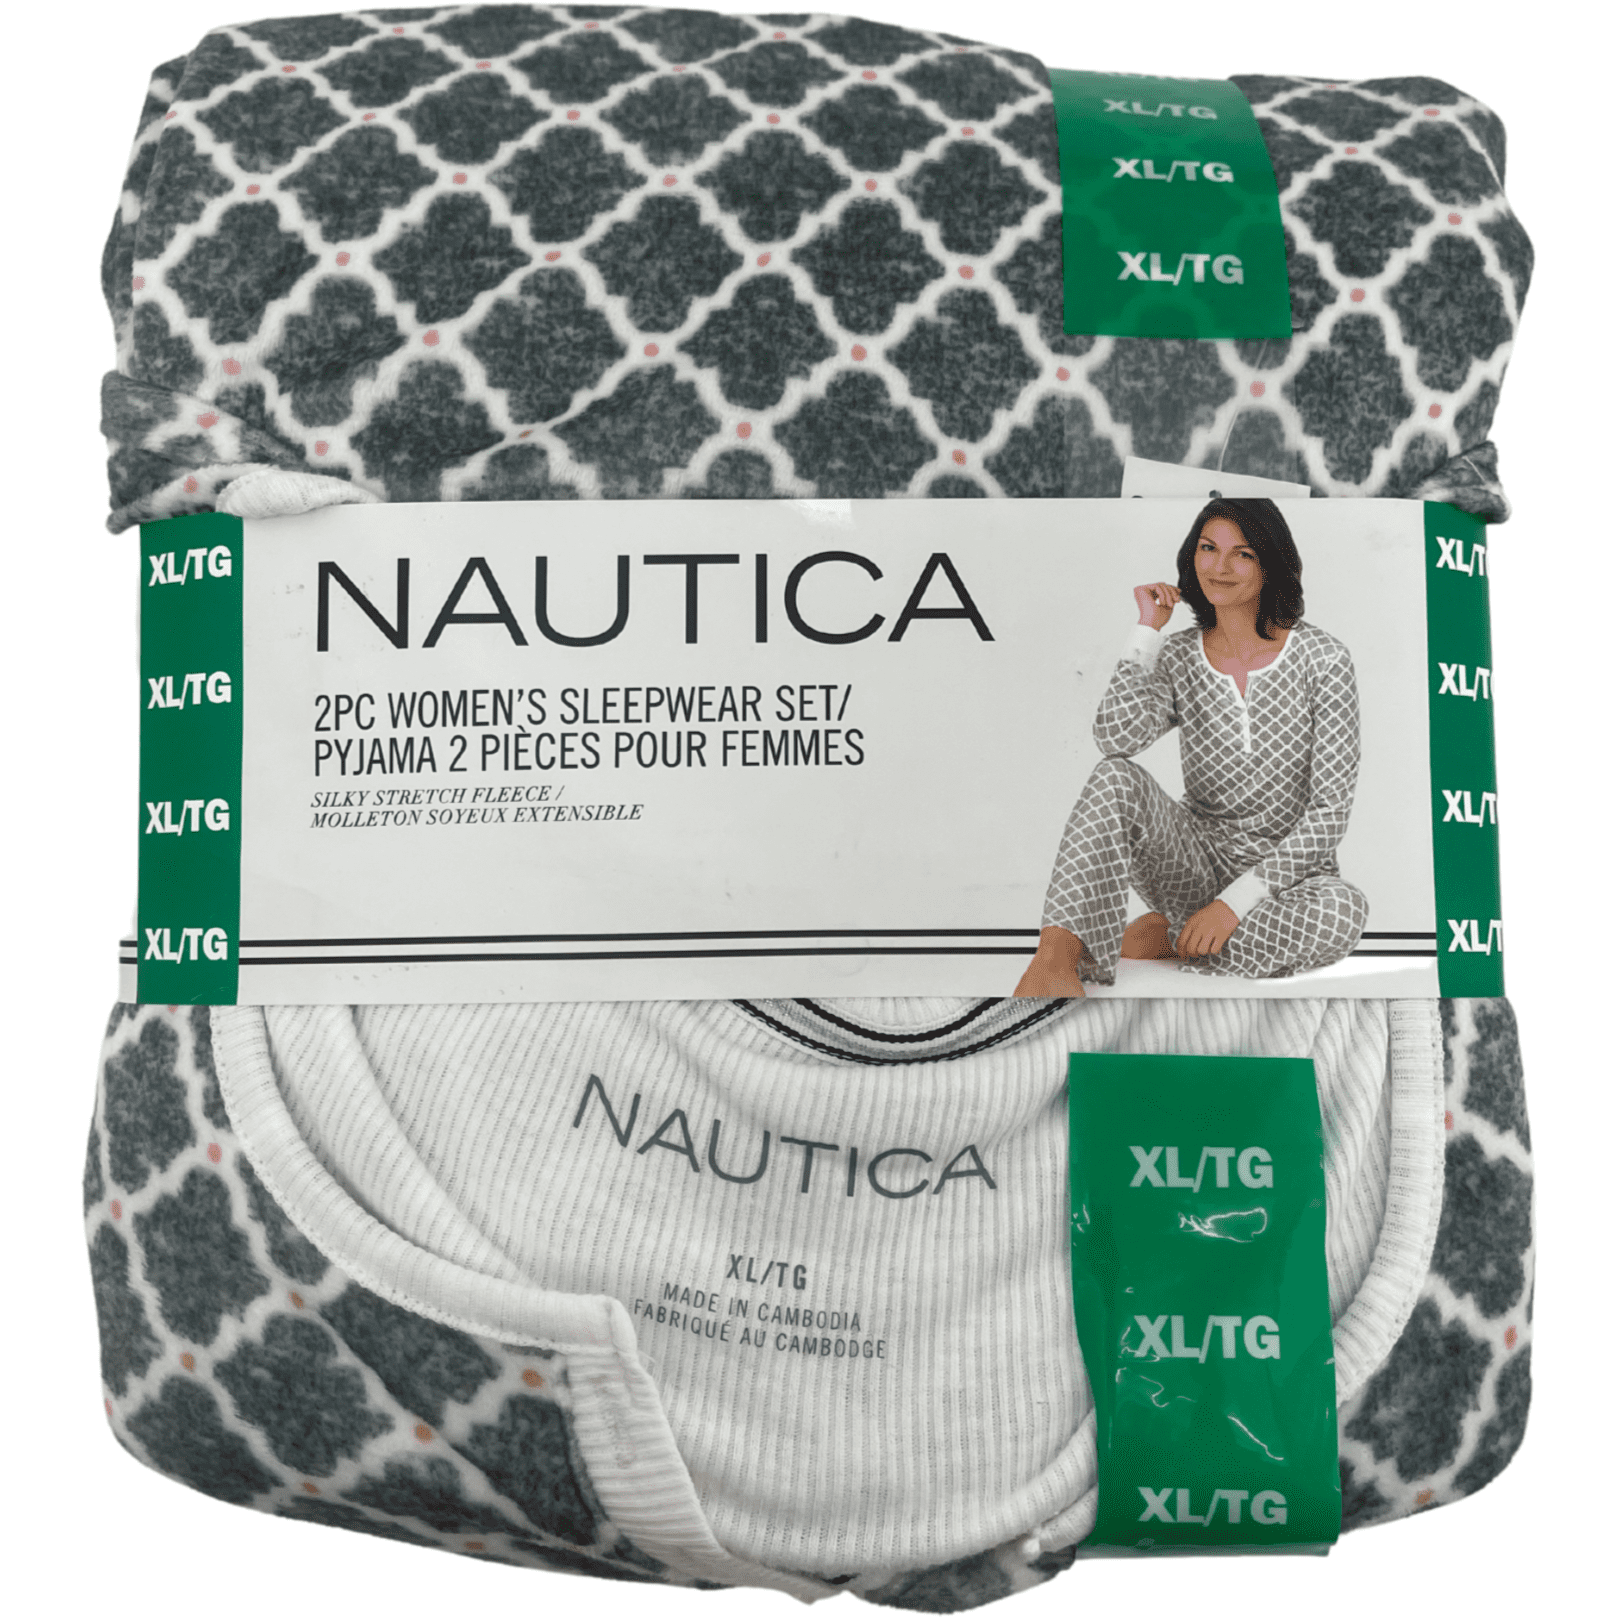 Nautica, Intimates & Sleepwear